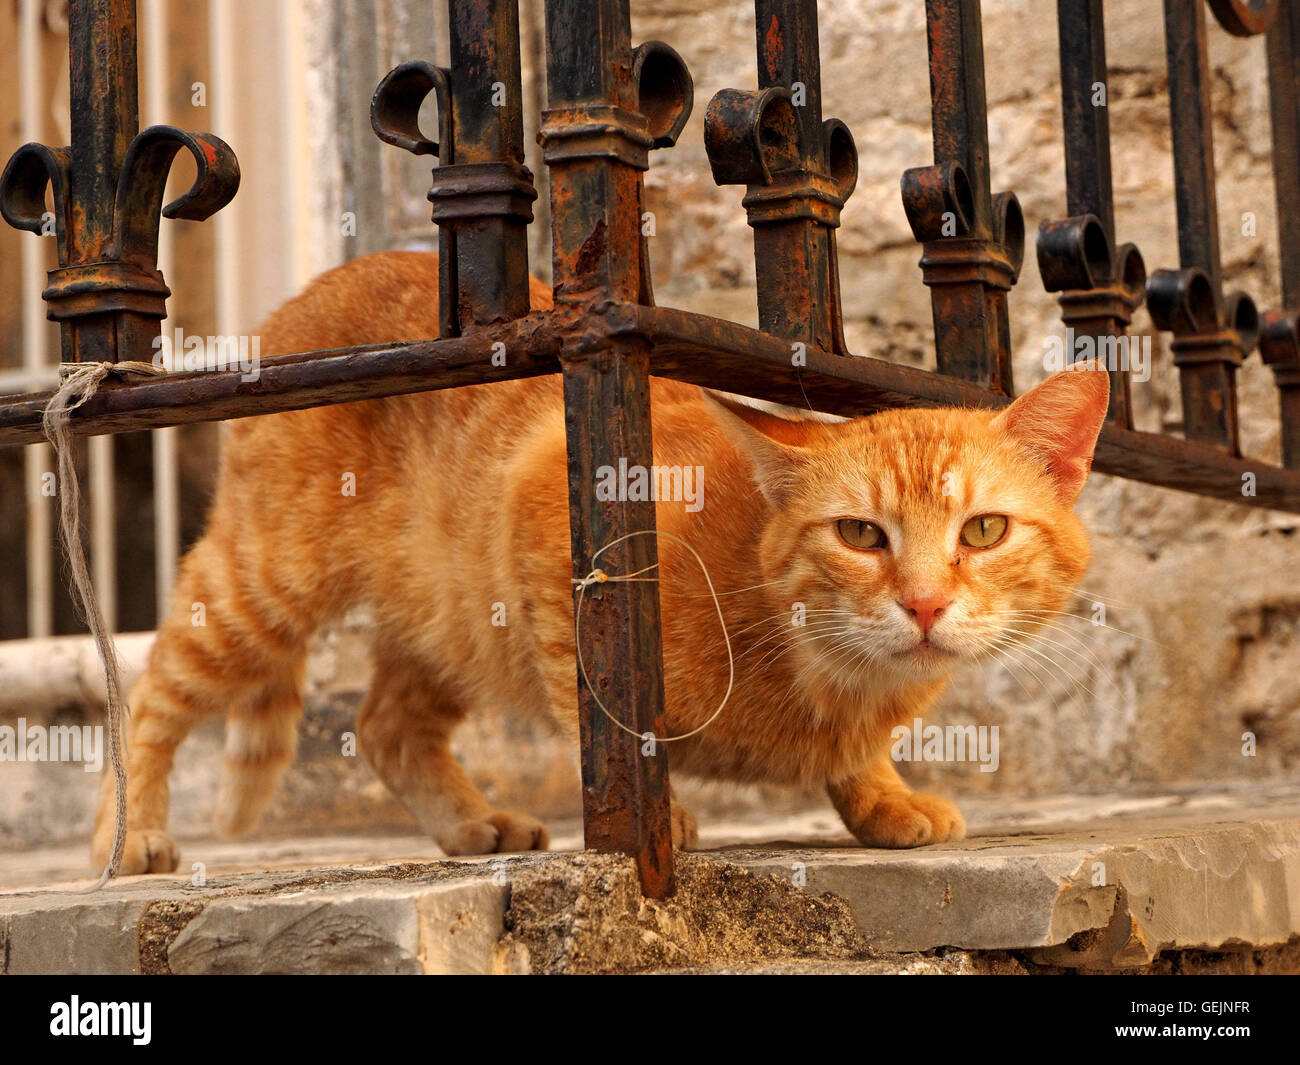 Ginger marmalade cat peering below railings of Budva Old Town Montenegro in evening light Stock Photo